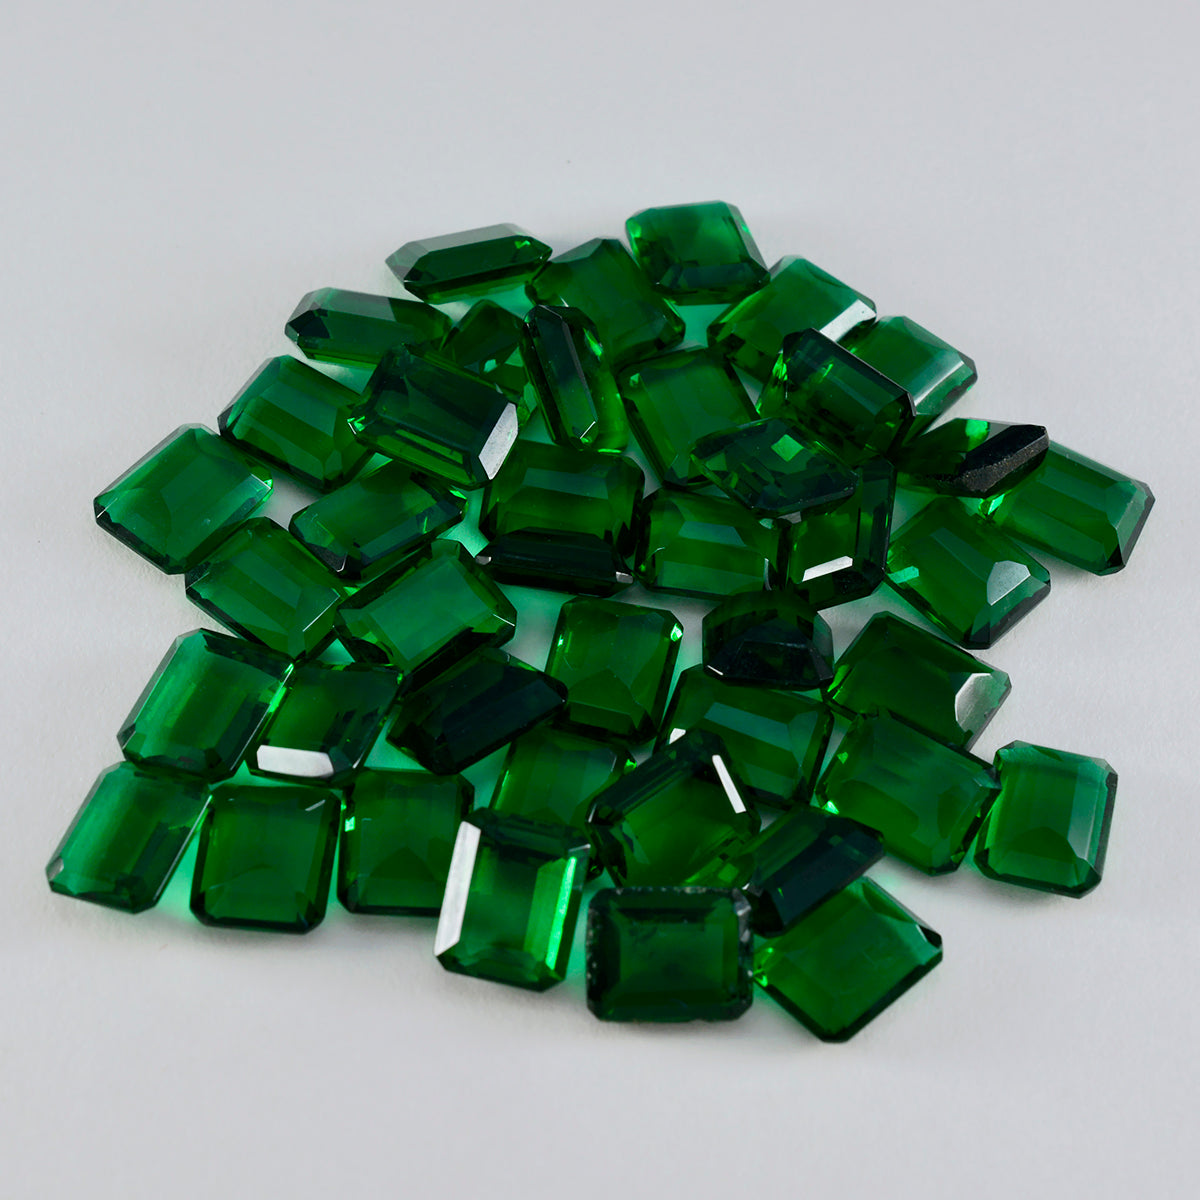 riyogems 1pc グリーン エメラルド CZ ファセット 6x8 mm 八角形の素敵な品質のルース宝石